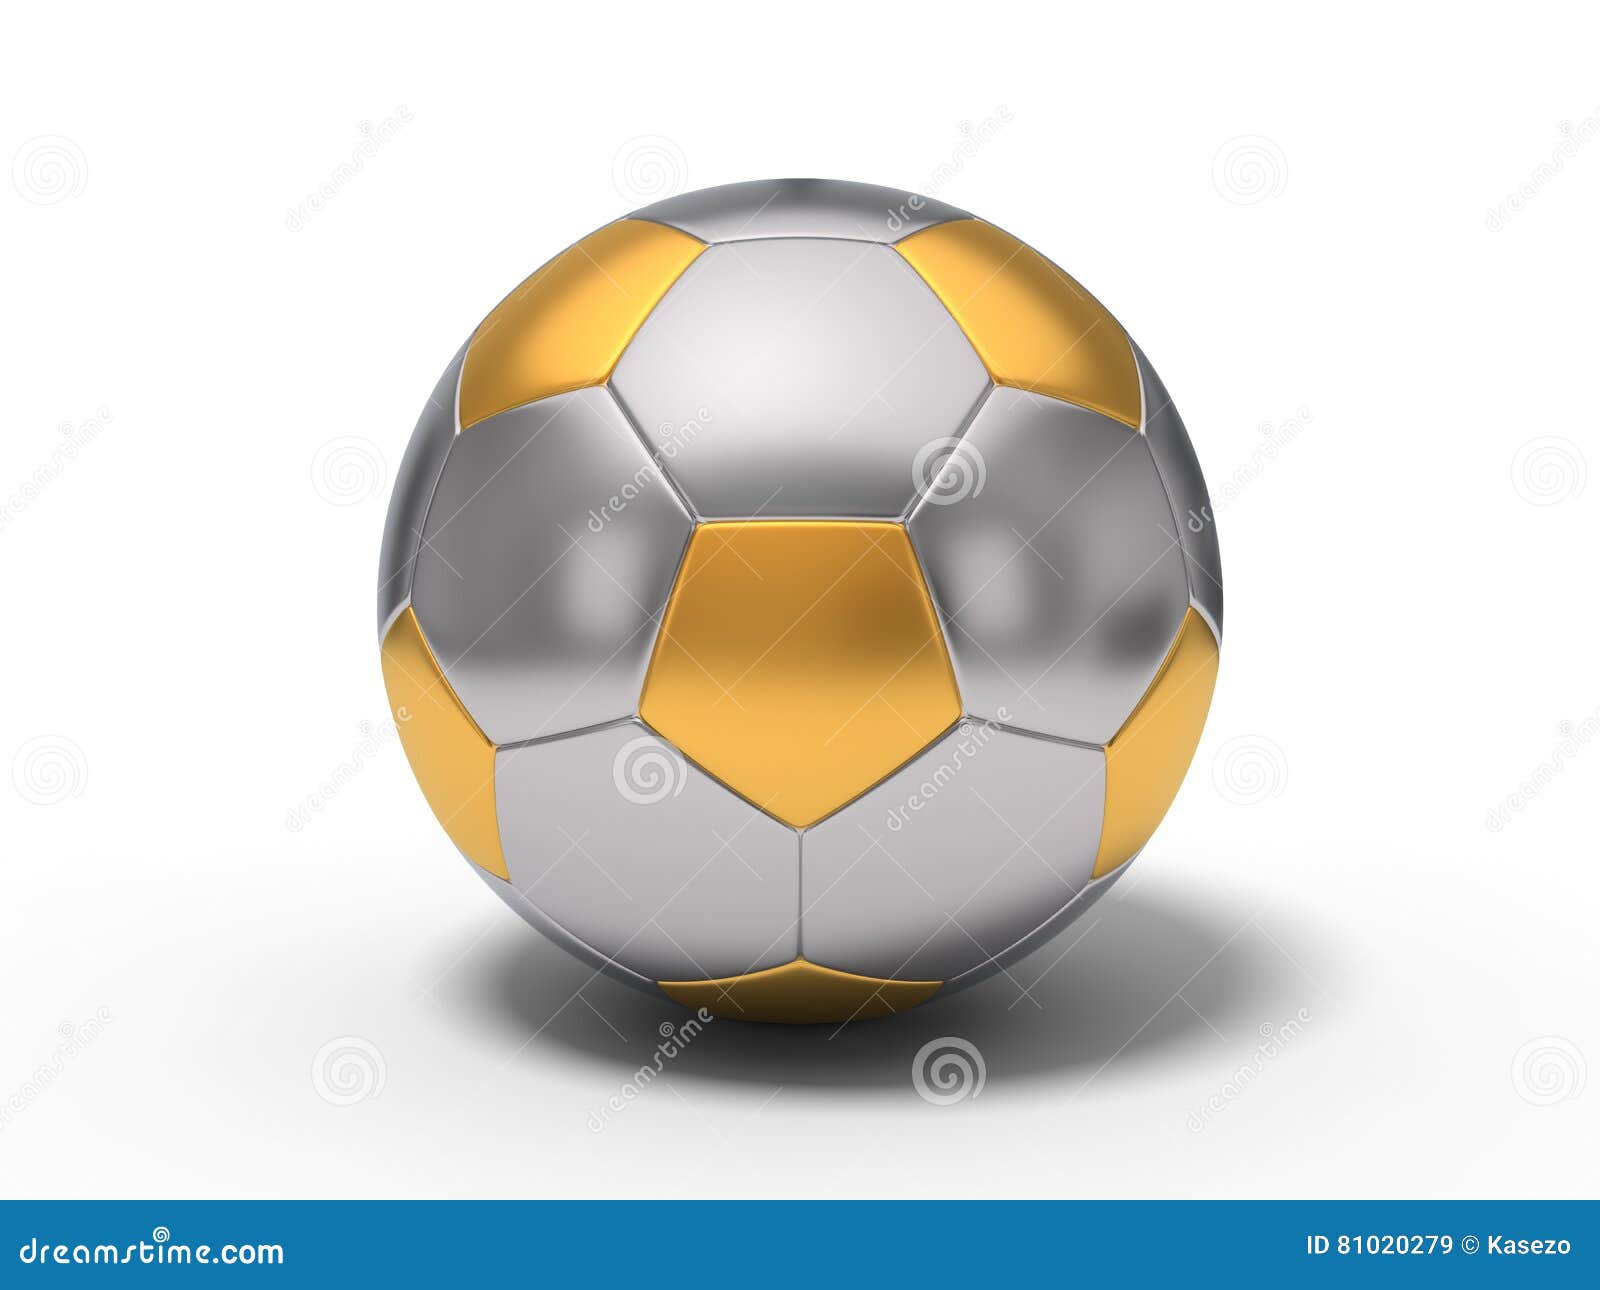 Metalic Soccer Ball. Matte Gold and Chrome. Stock Illustration ...